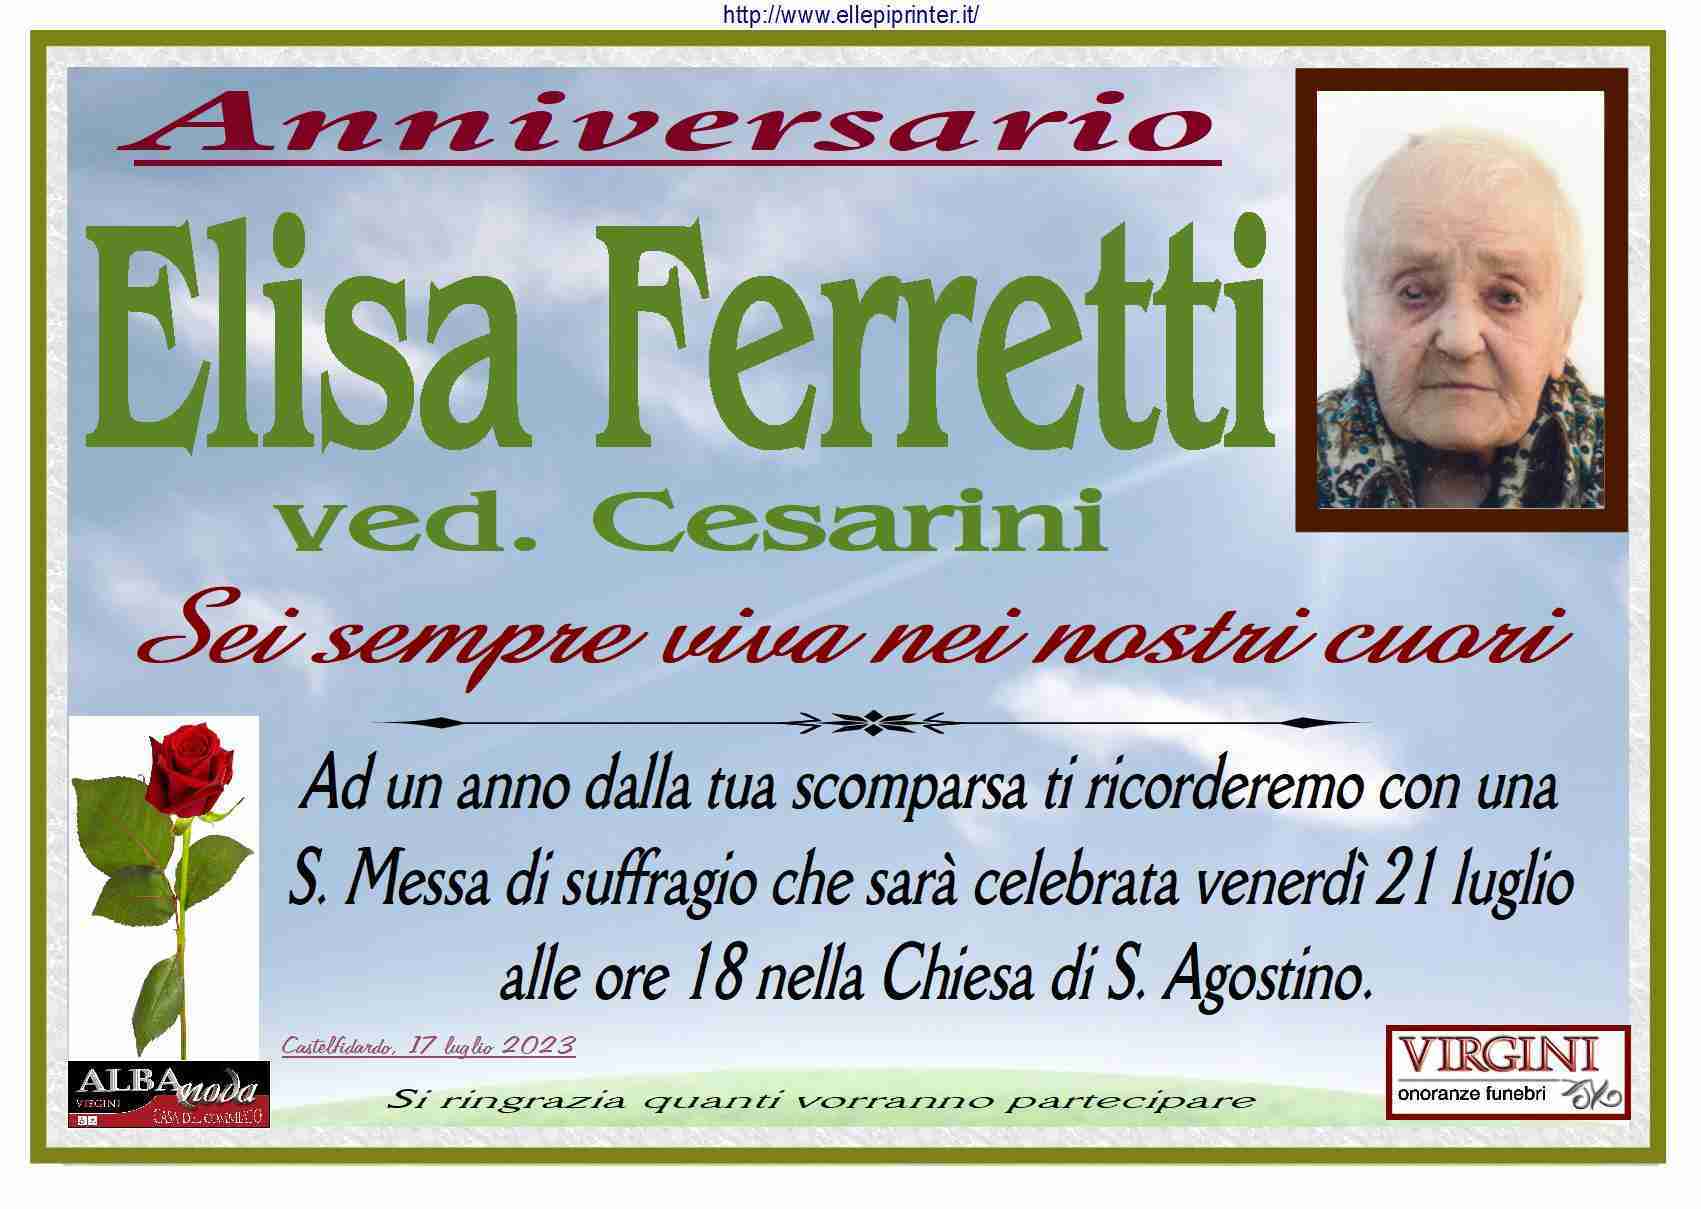 Elisa Ferretti